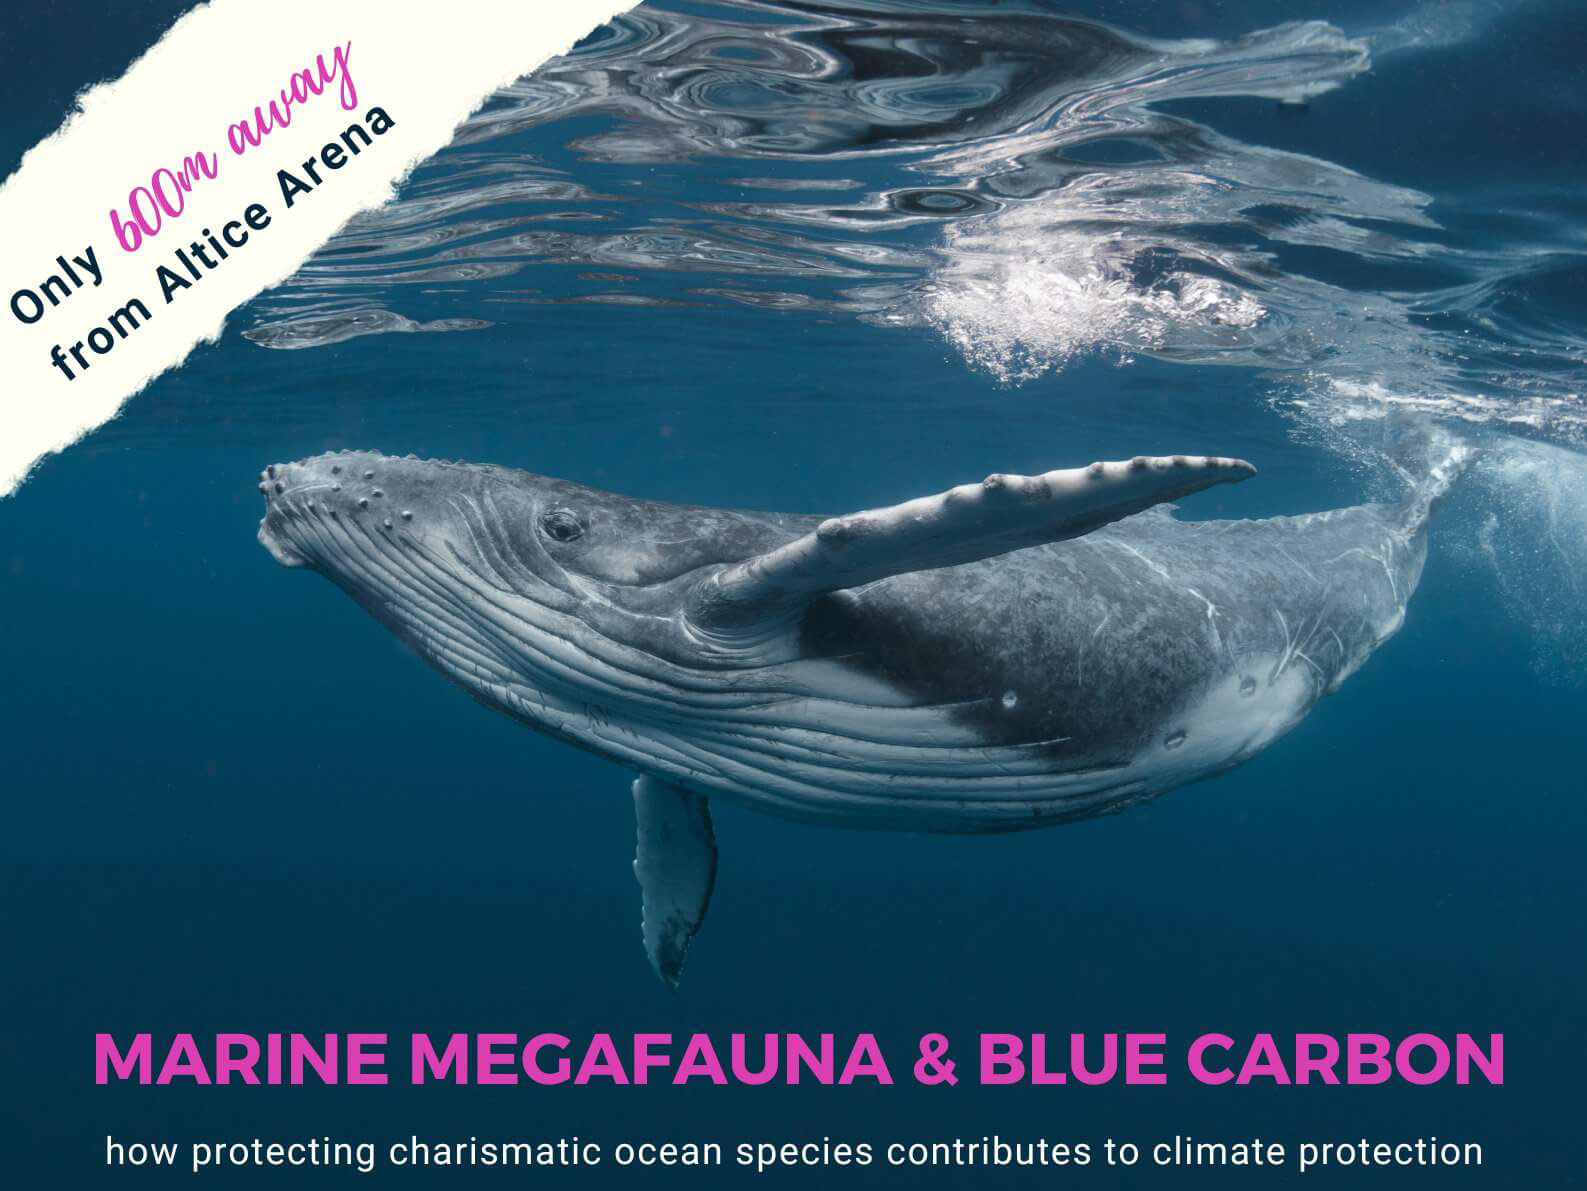 UN Ocean Conference side event: Marine megafauna & blue carbon